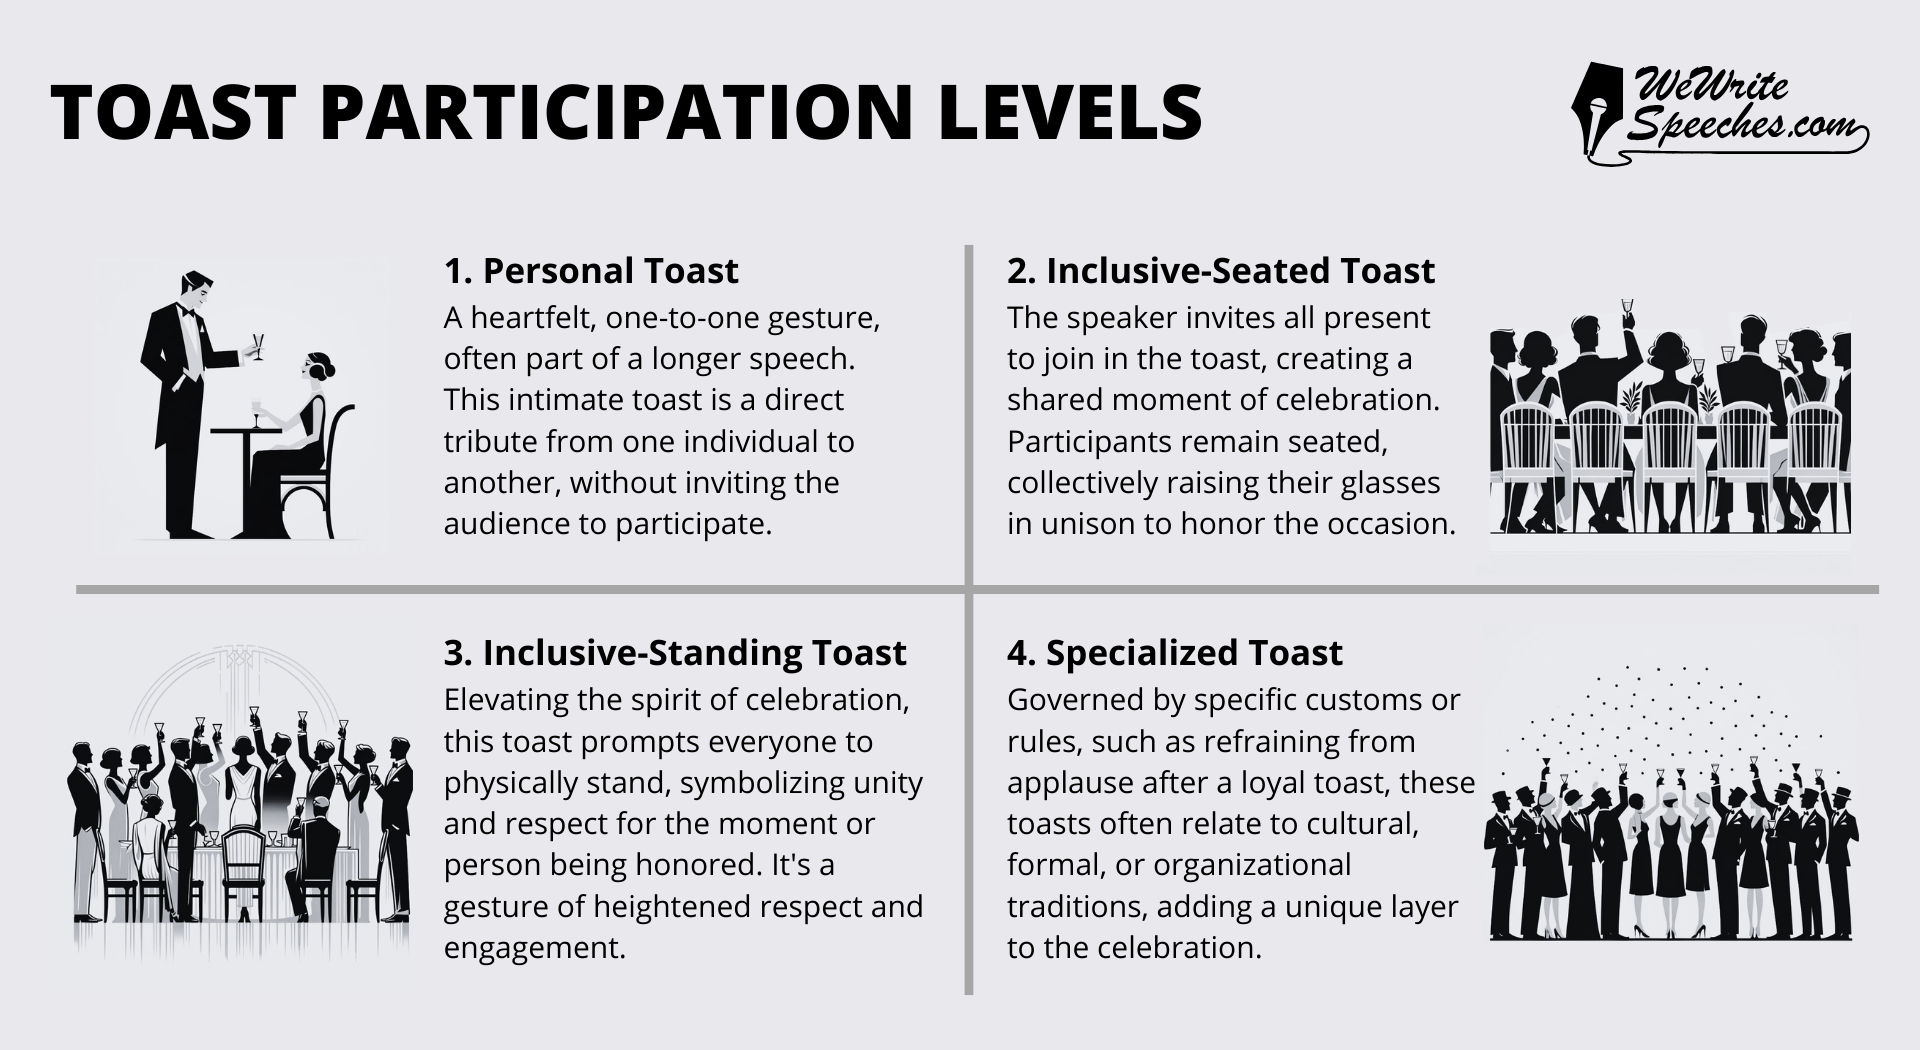 Toast participation levels